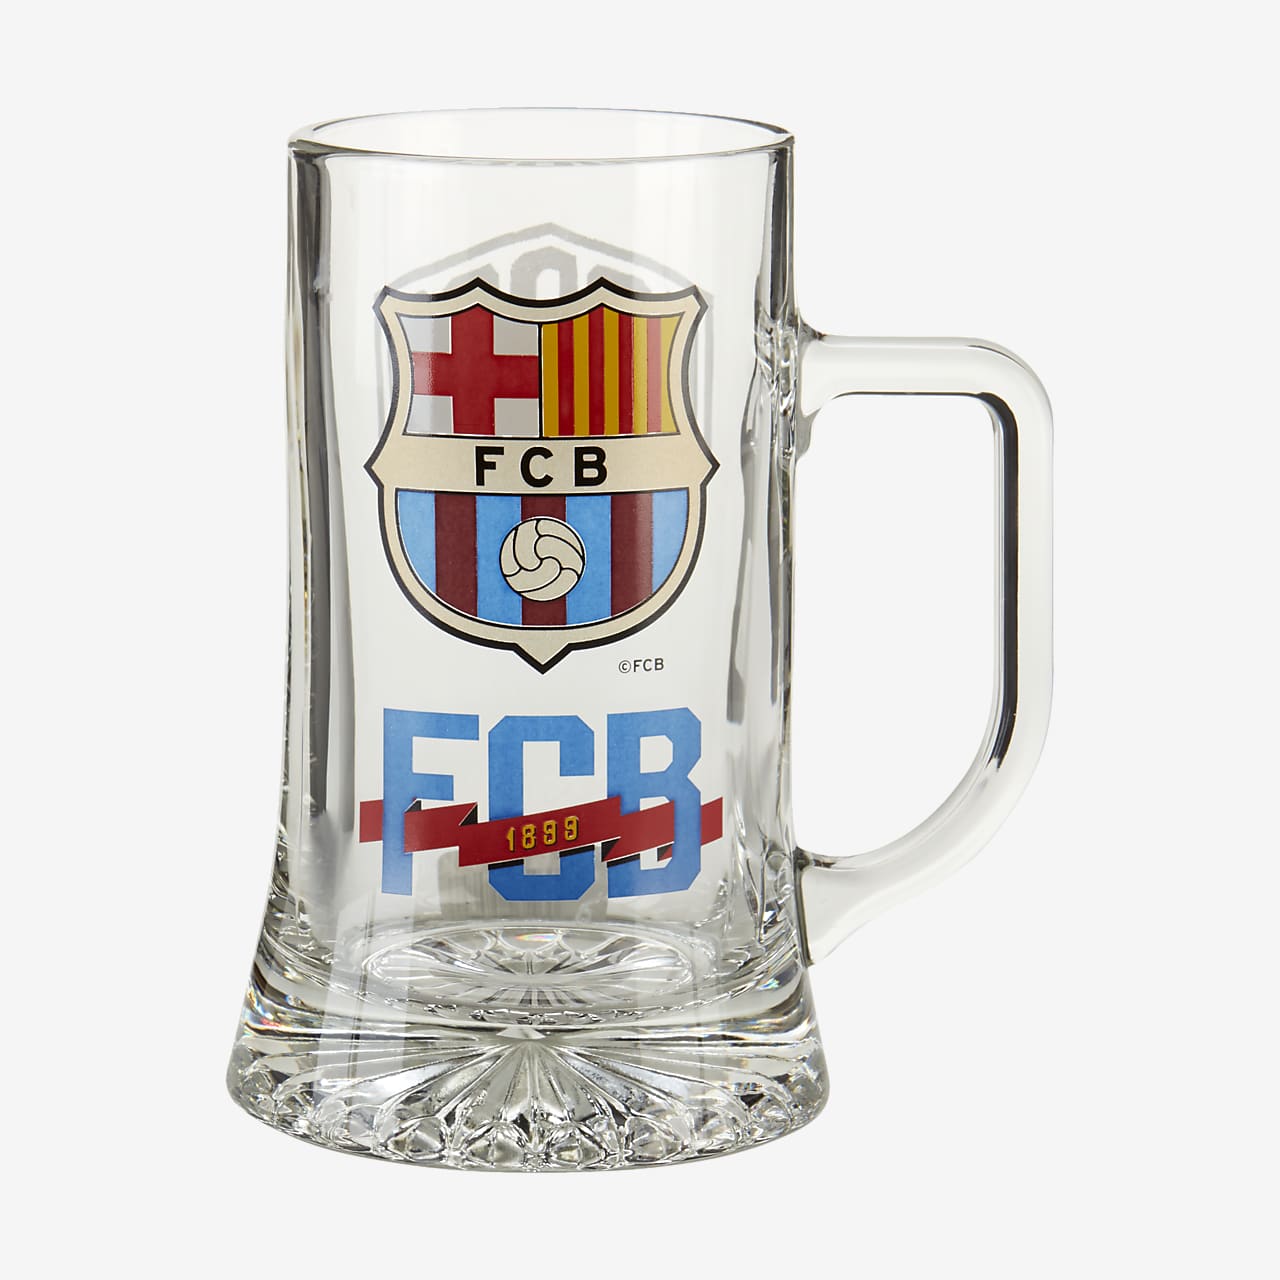 Caneca FC Barcelona 1899 Beer